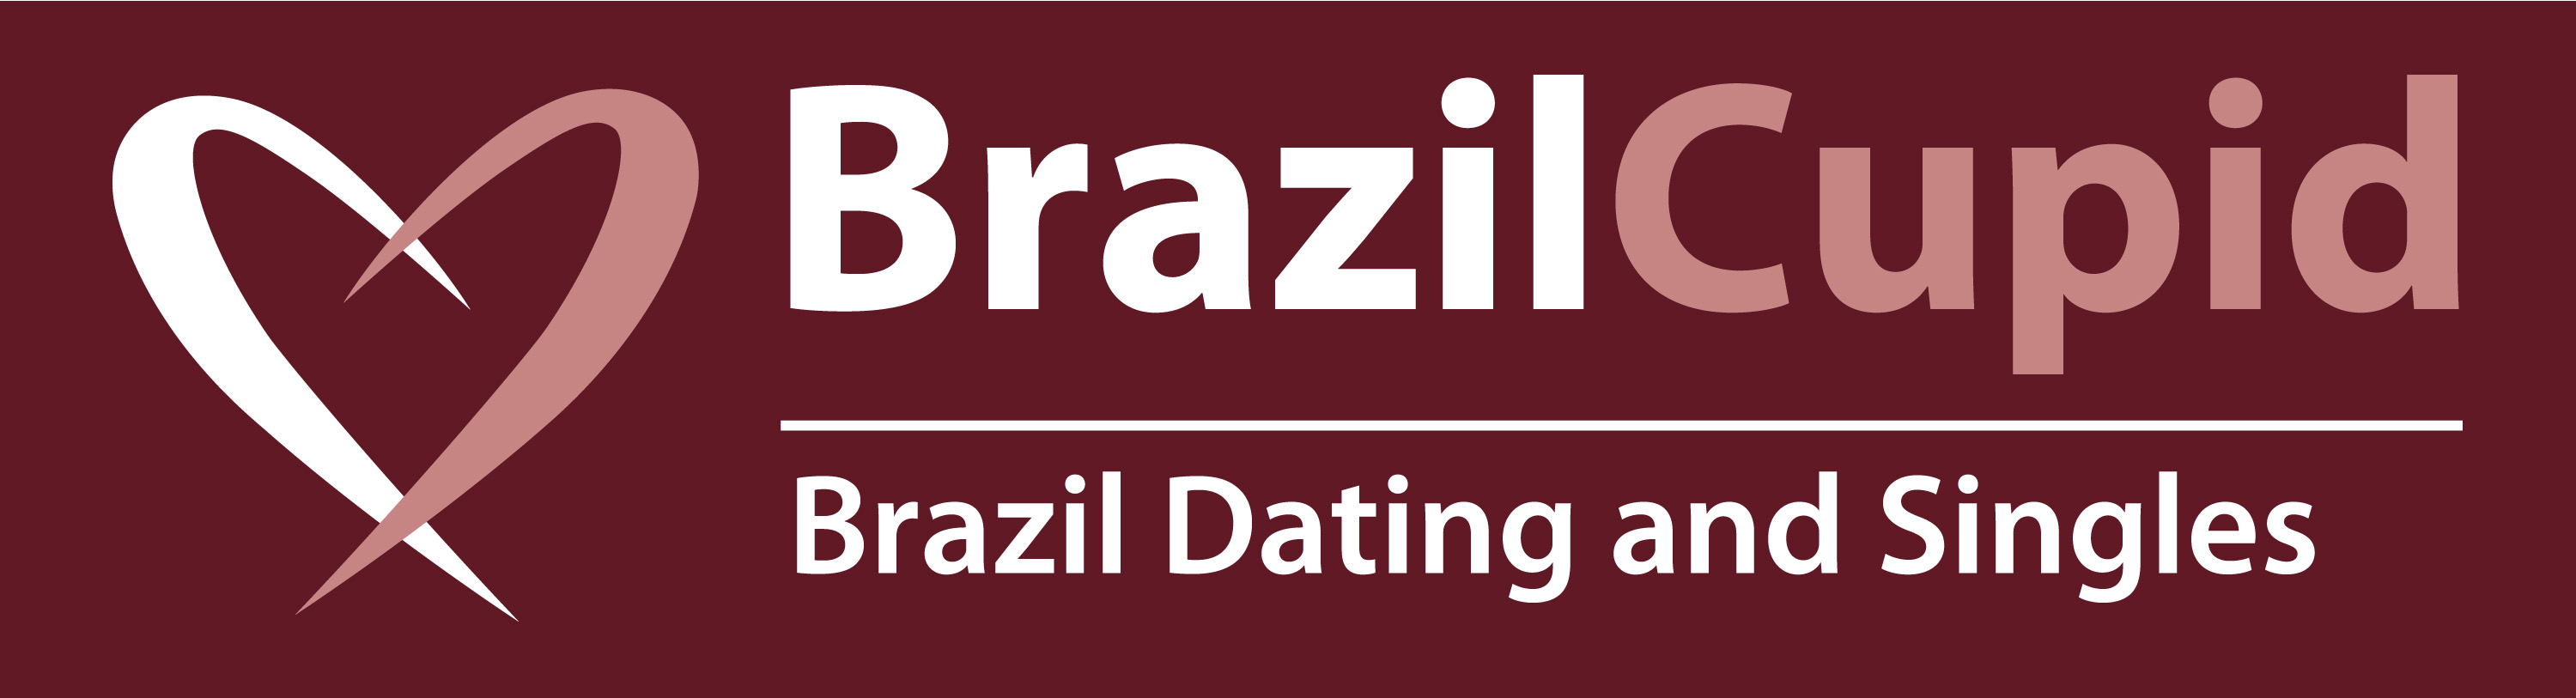 https://www.datingscout.sg/b6/image/upload/ds/upload/reviews/ENG/brazilcupid/brazilcupid-logo.jpg